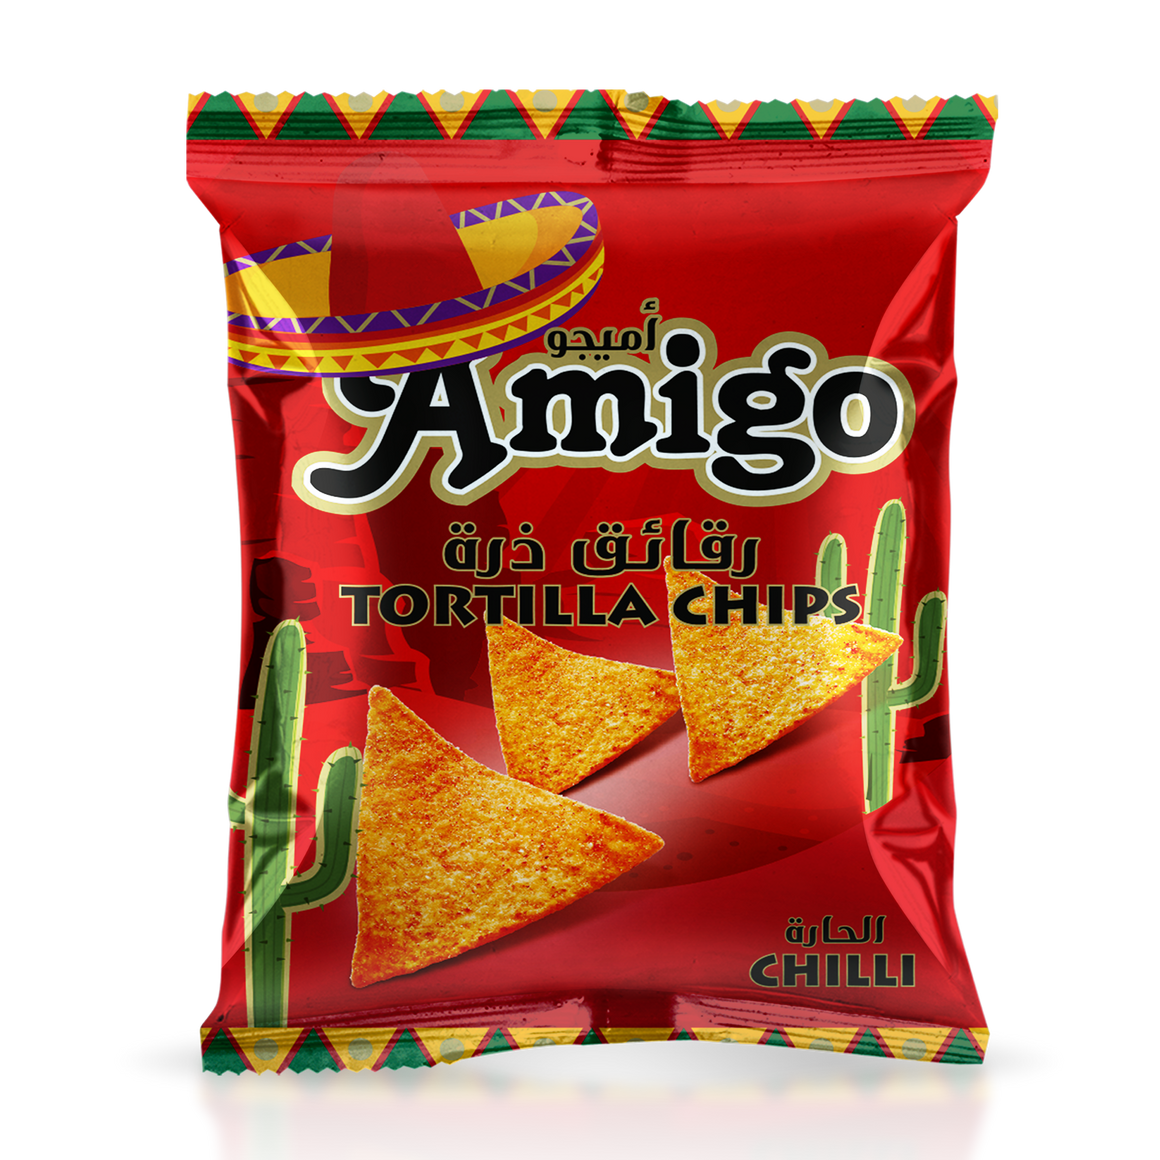 Amigo Tortilla Chilli Chips - 250g